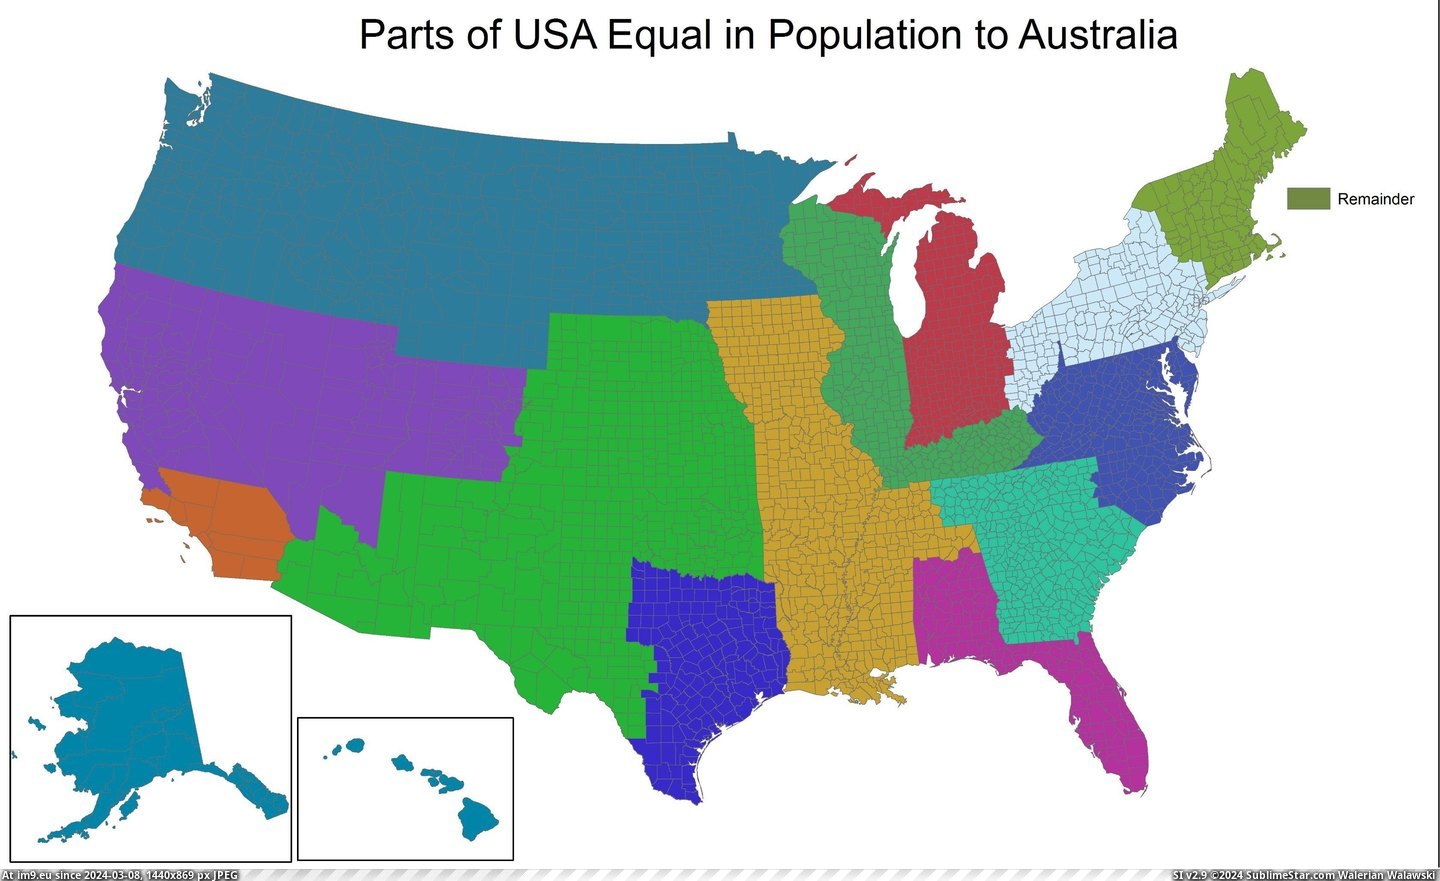 #Parts #Population #Equal #Australia #Usa [Mapporn] Parts of USA Equal in Population to Australia [5600x3400] Pic. (Изображение из альбом My r/MAPS favs))